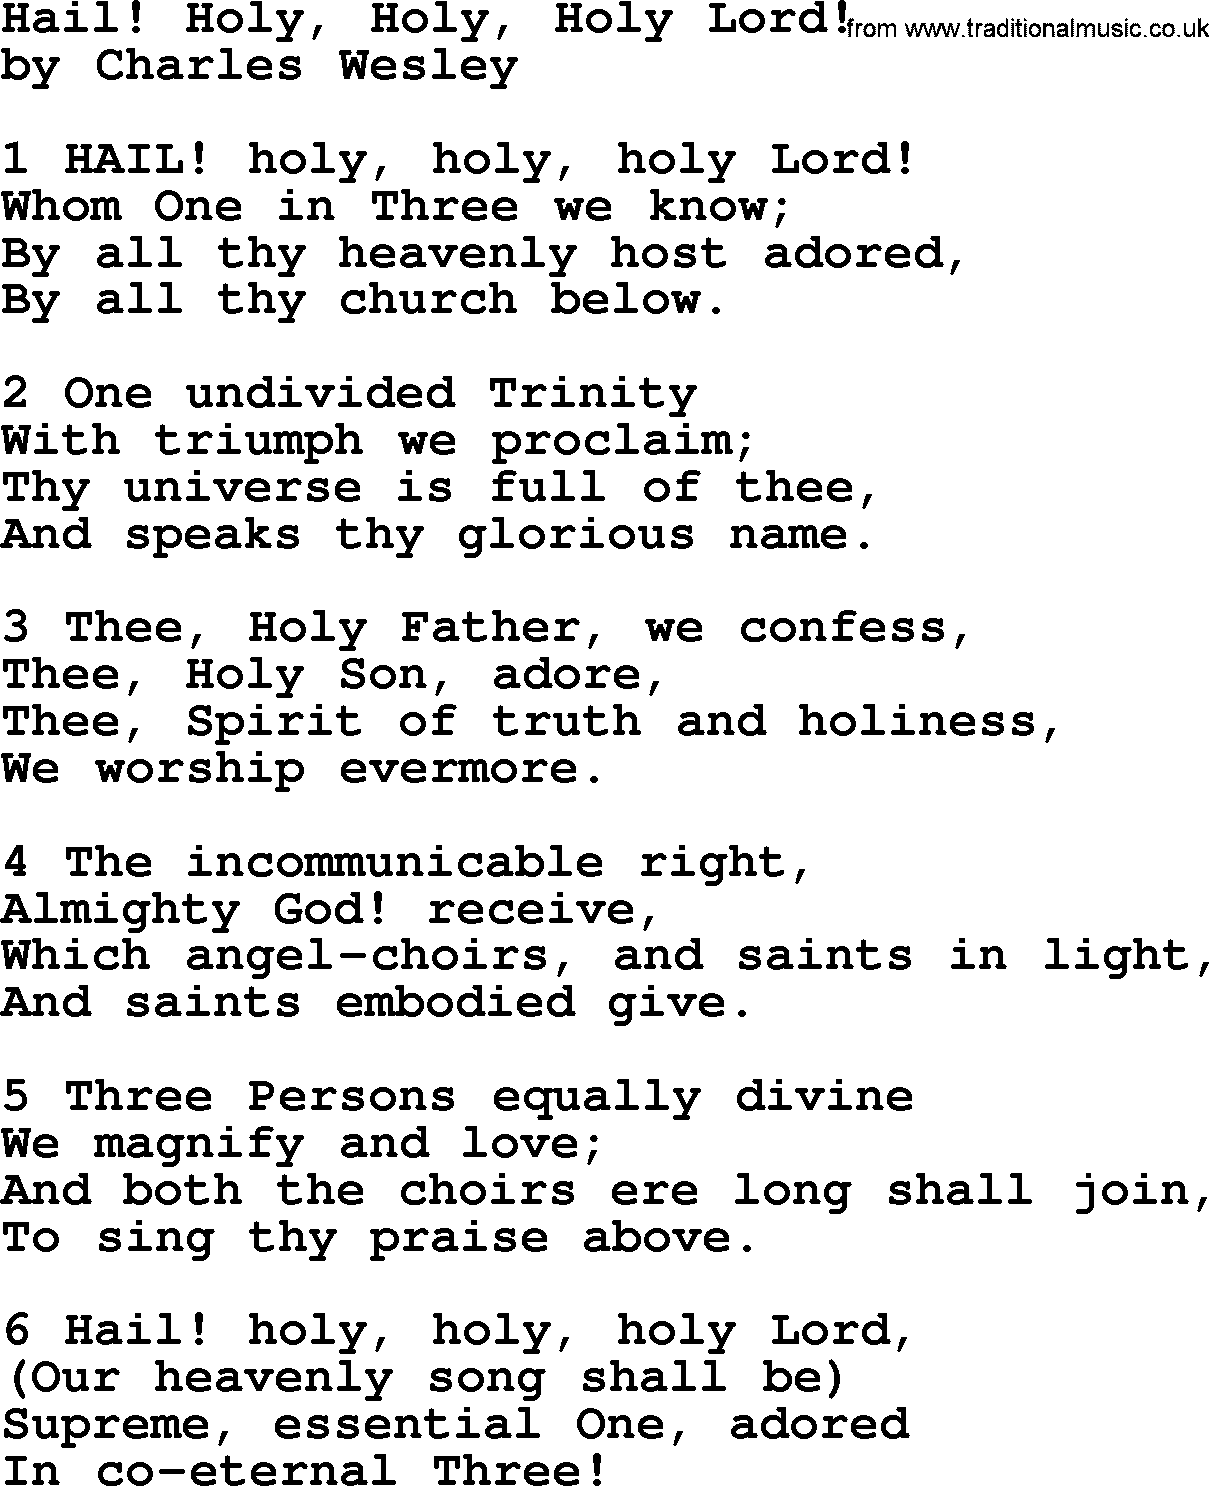 Charles Wesley hymn: Hail! Holy, Holy, Holy Lord!, lyrics